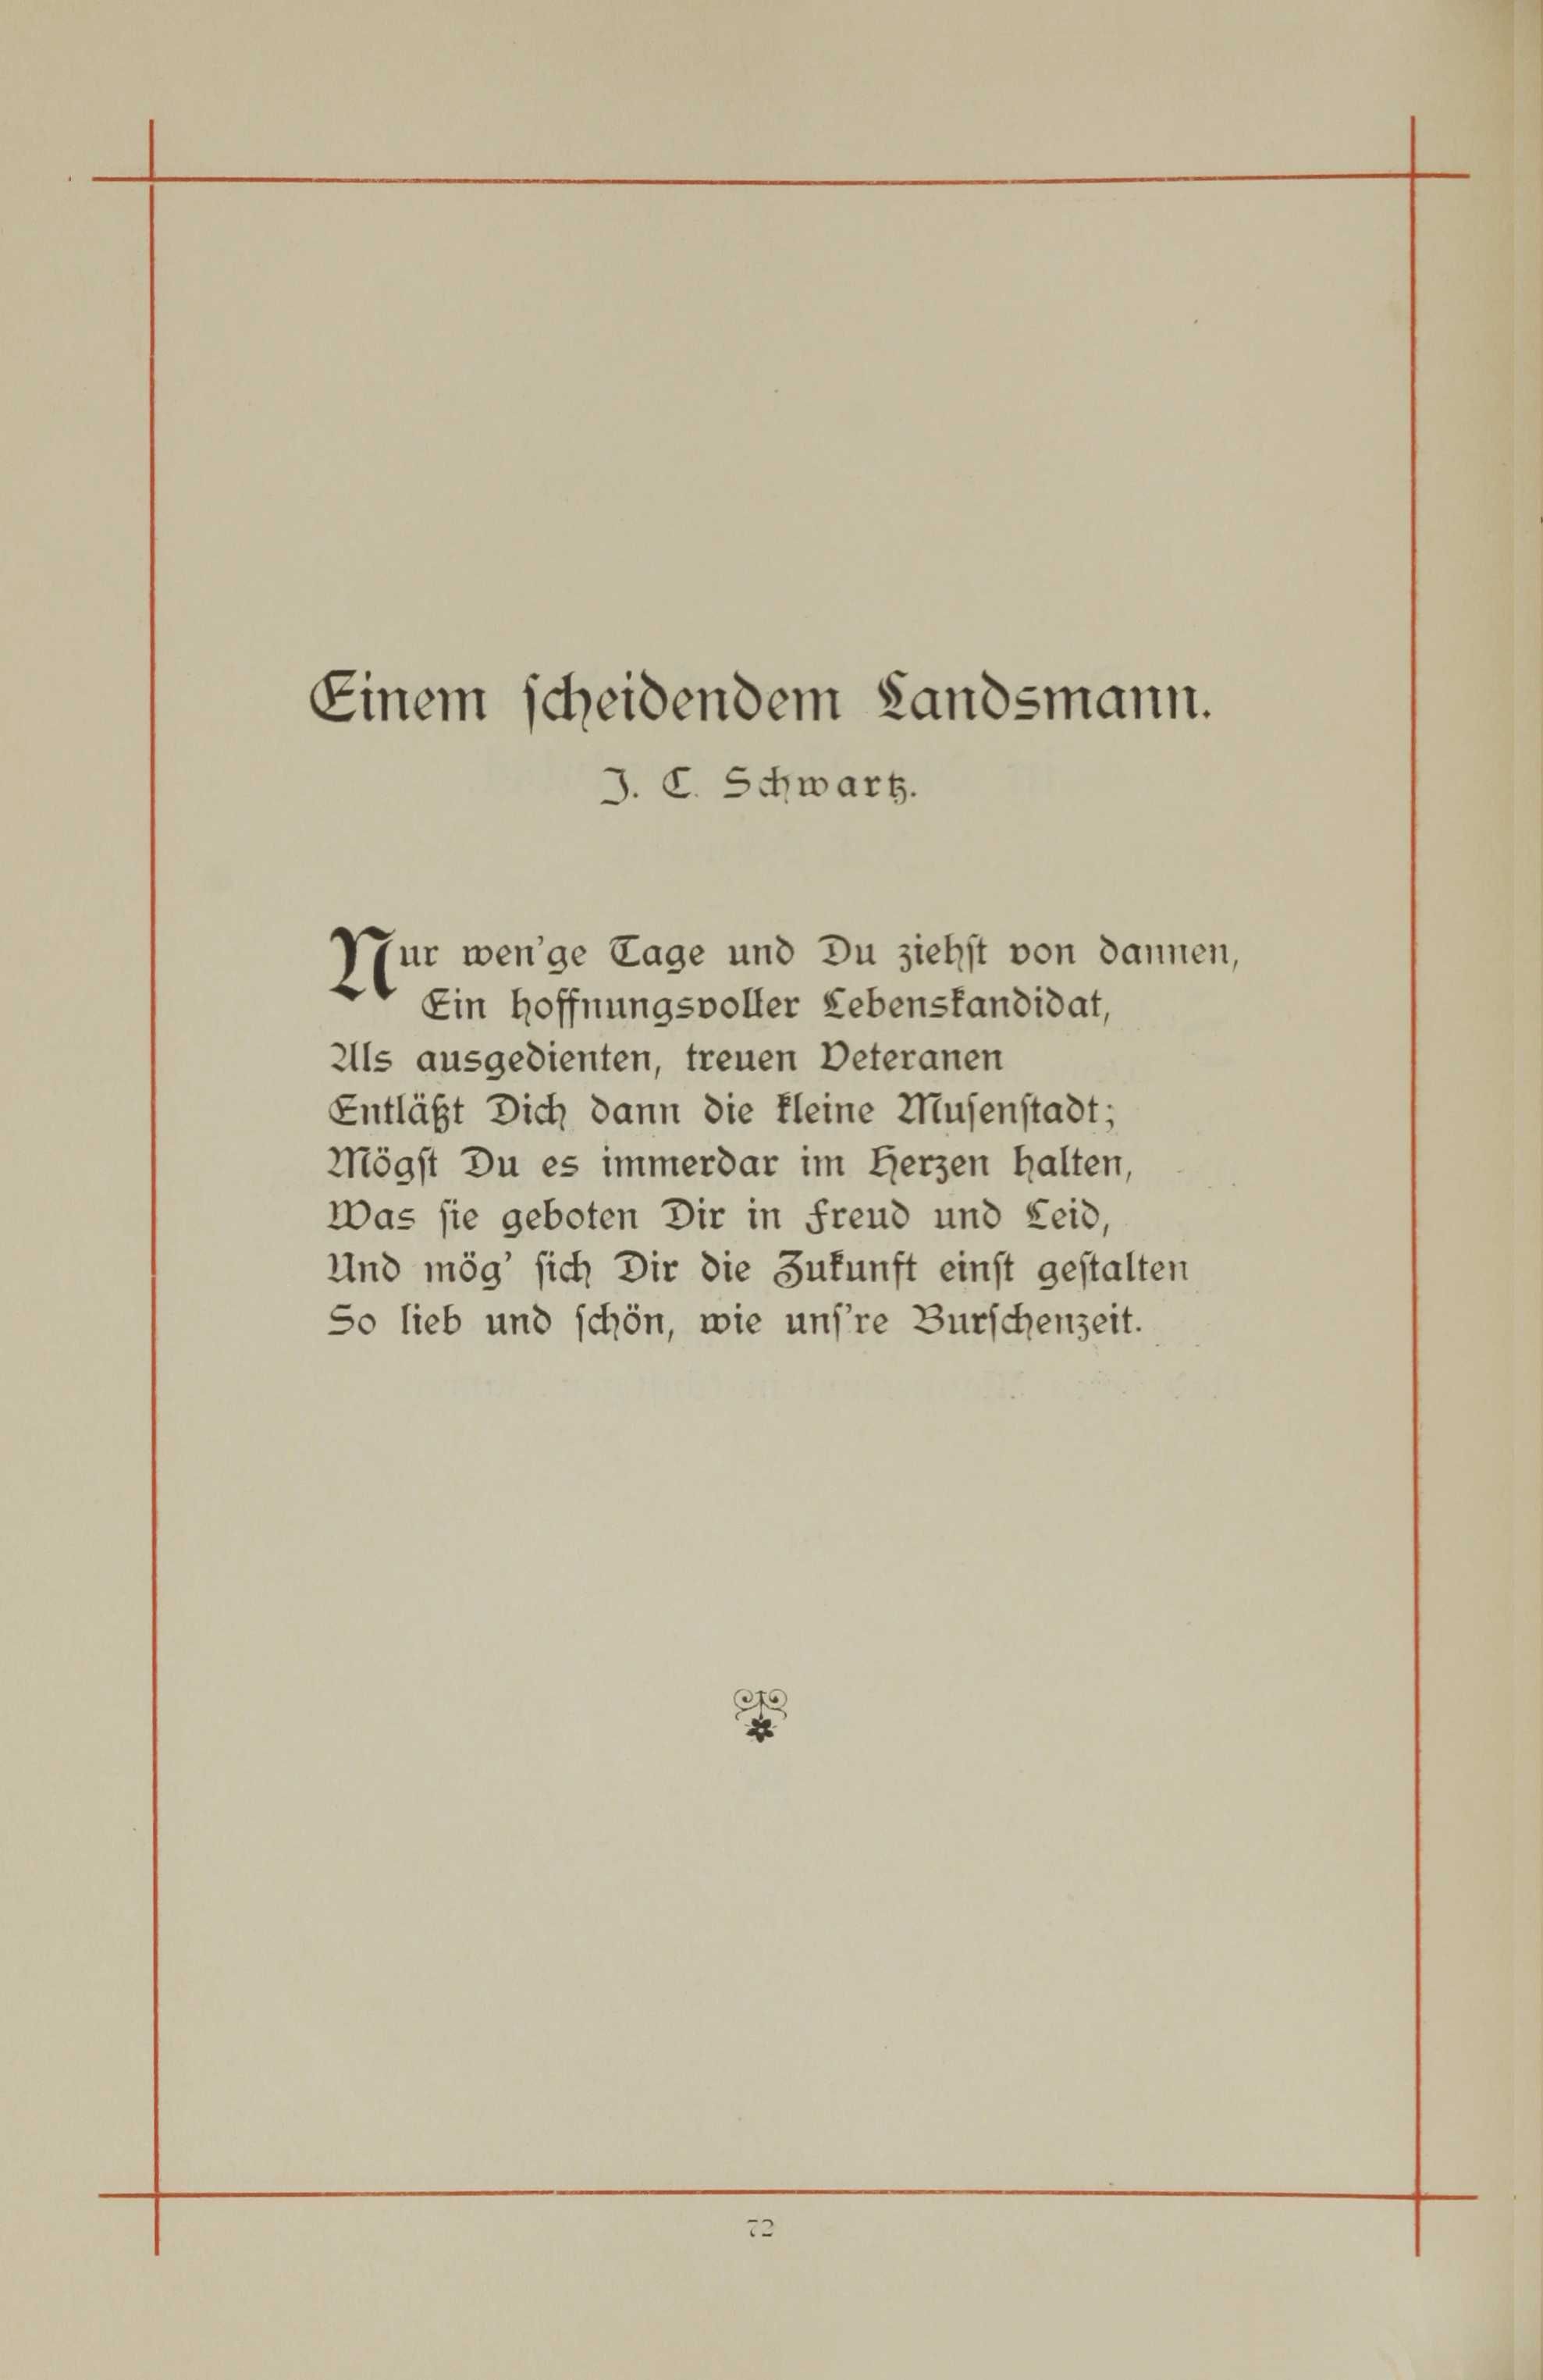 Erinnerung an die Fraternitas (1893) | 77. (72) Main body of text